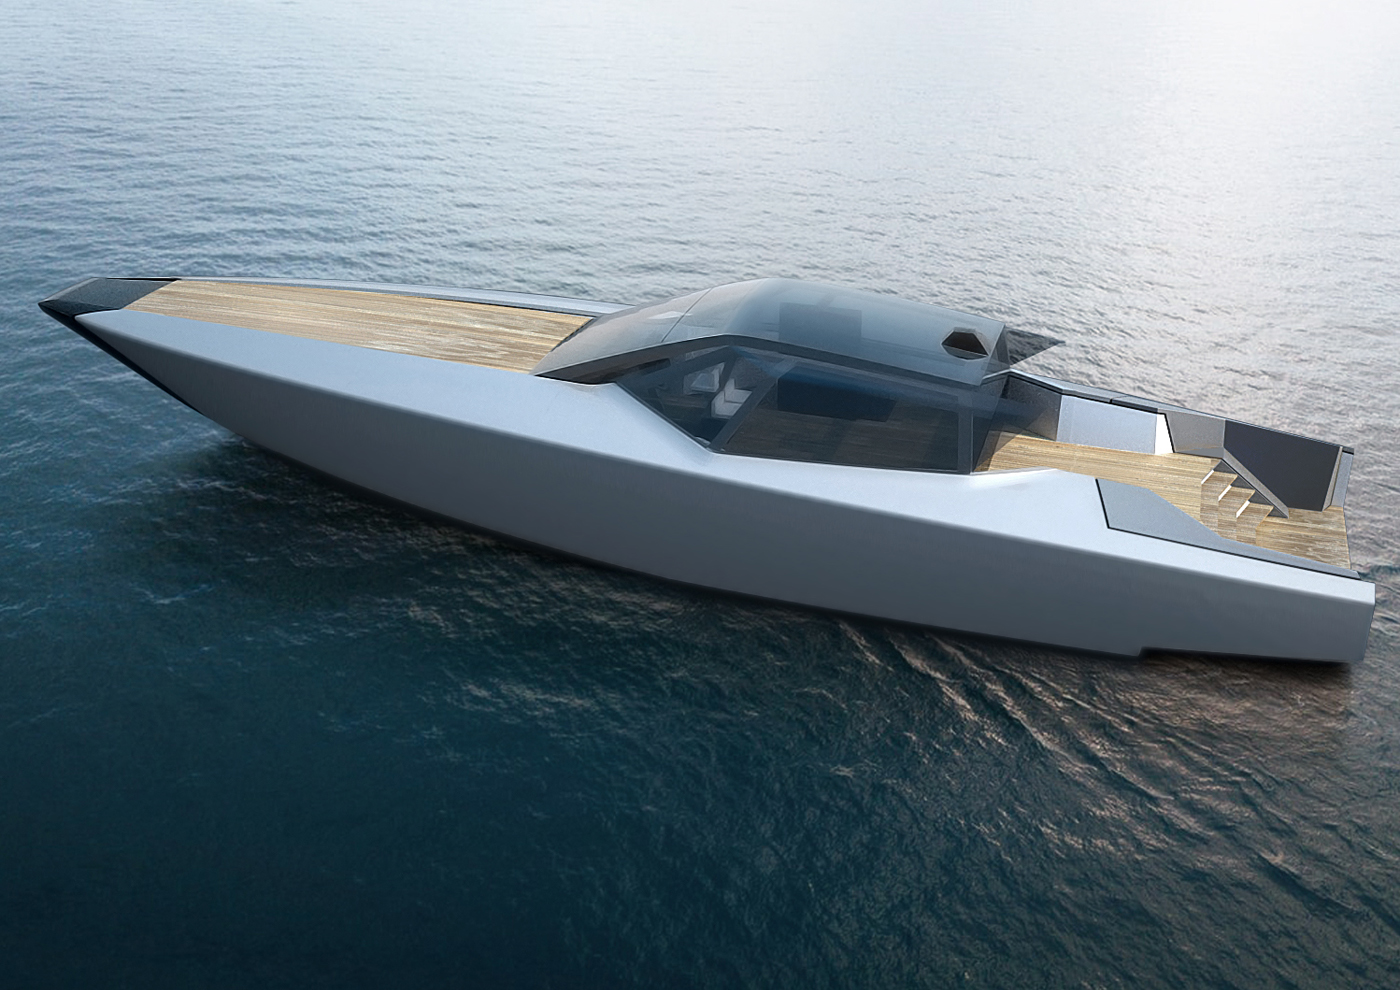 Yacht design - 90 Feet - Power boat - Final exterior1 - Davide Mezzasalma - Furniture design - Berlin